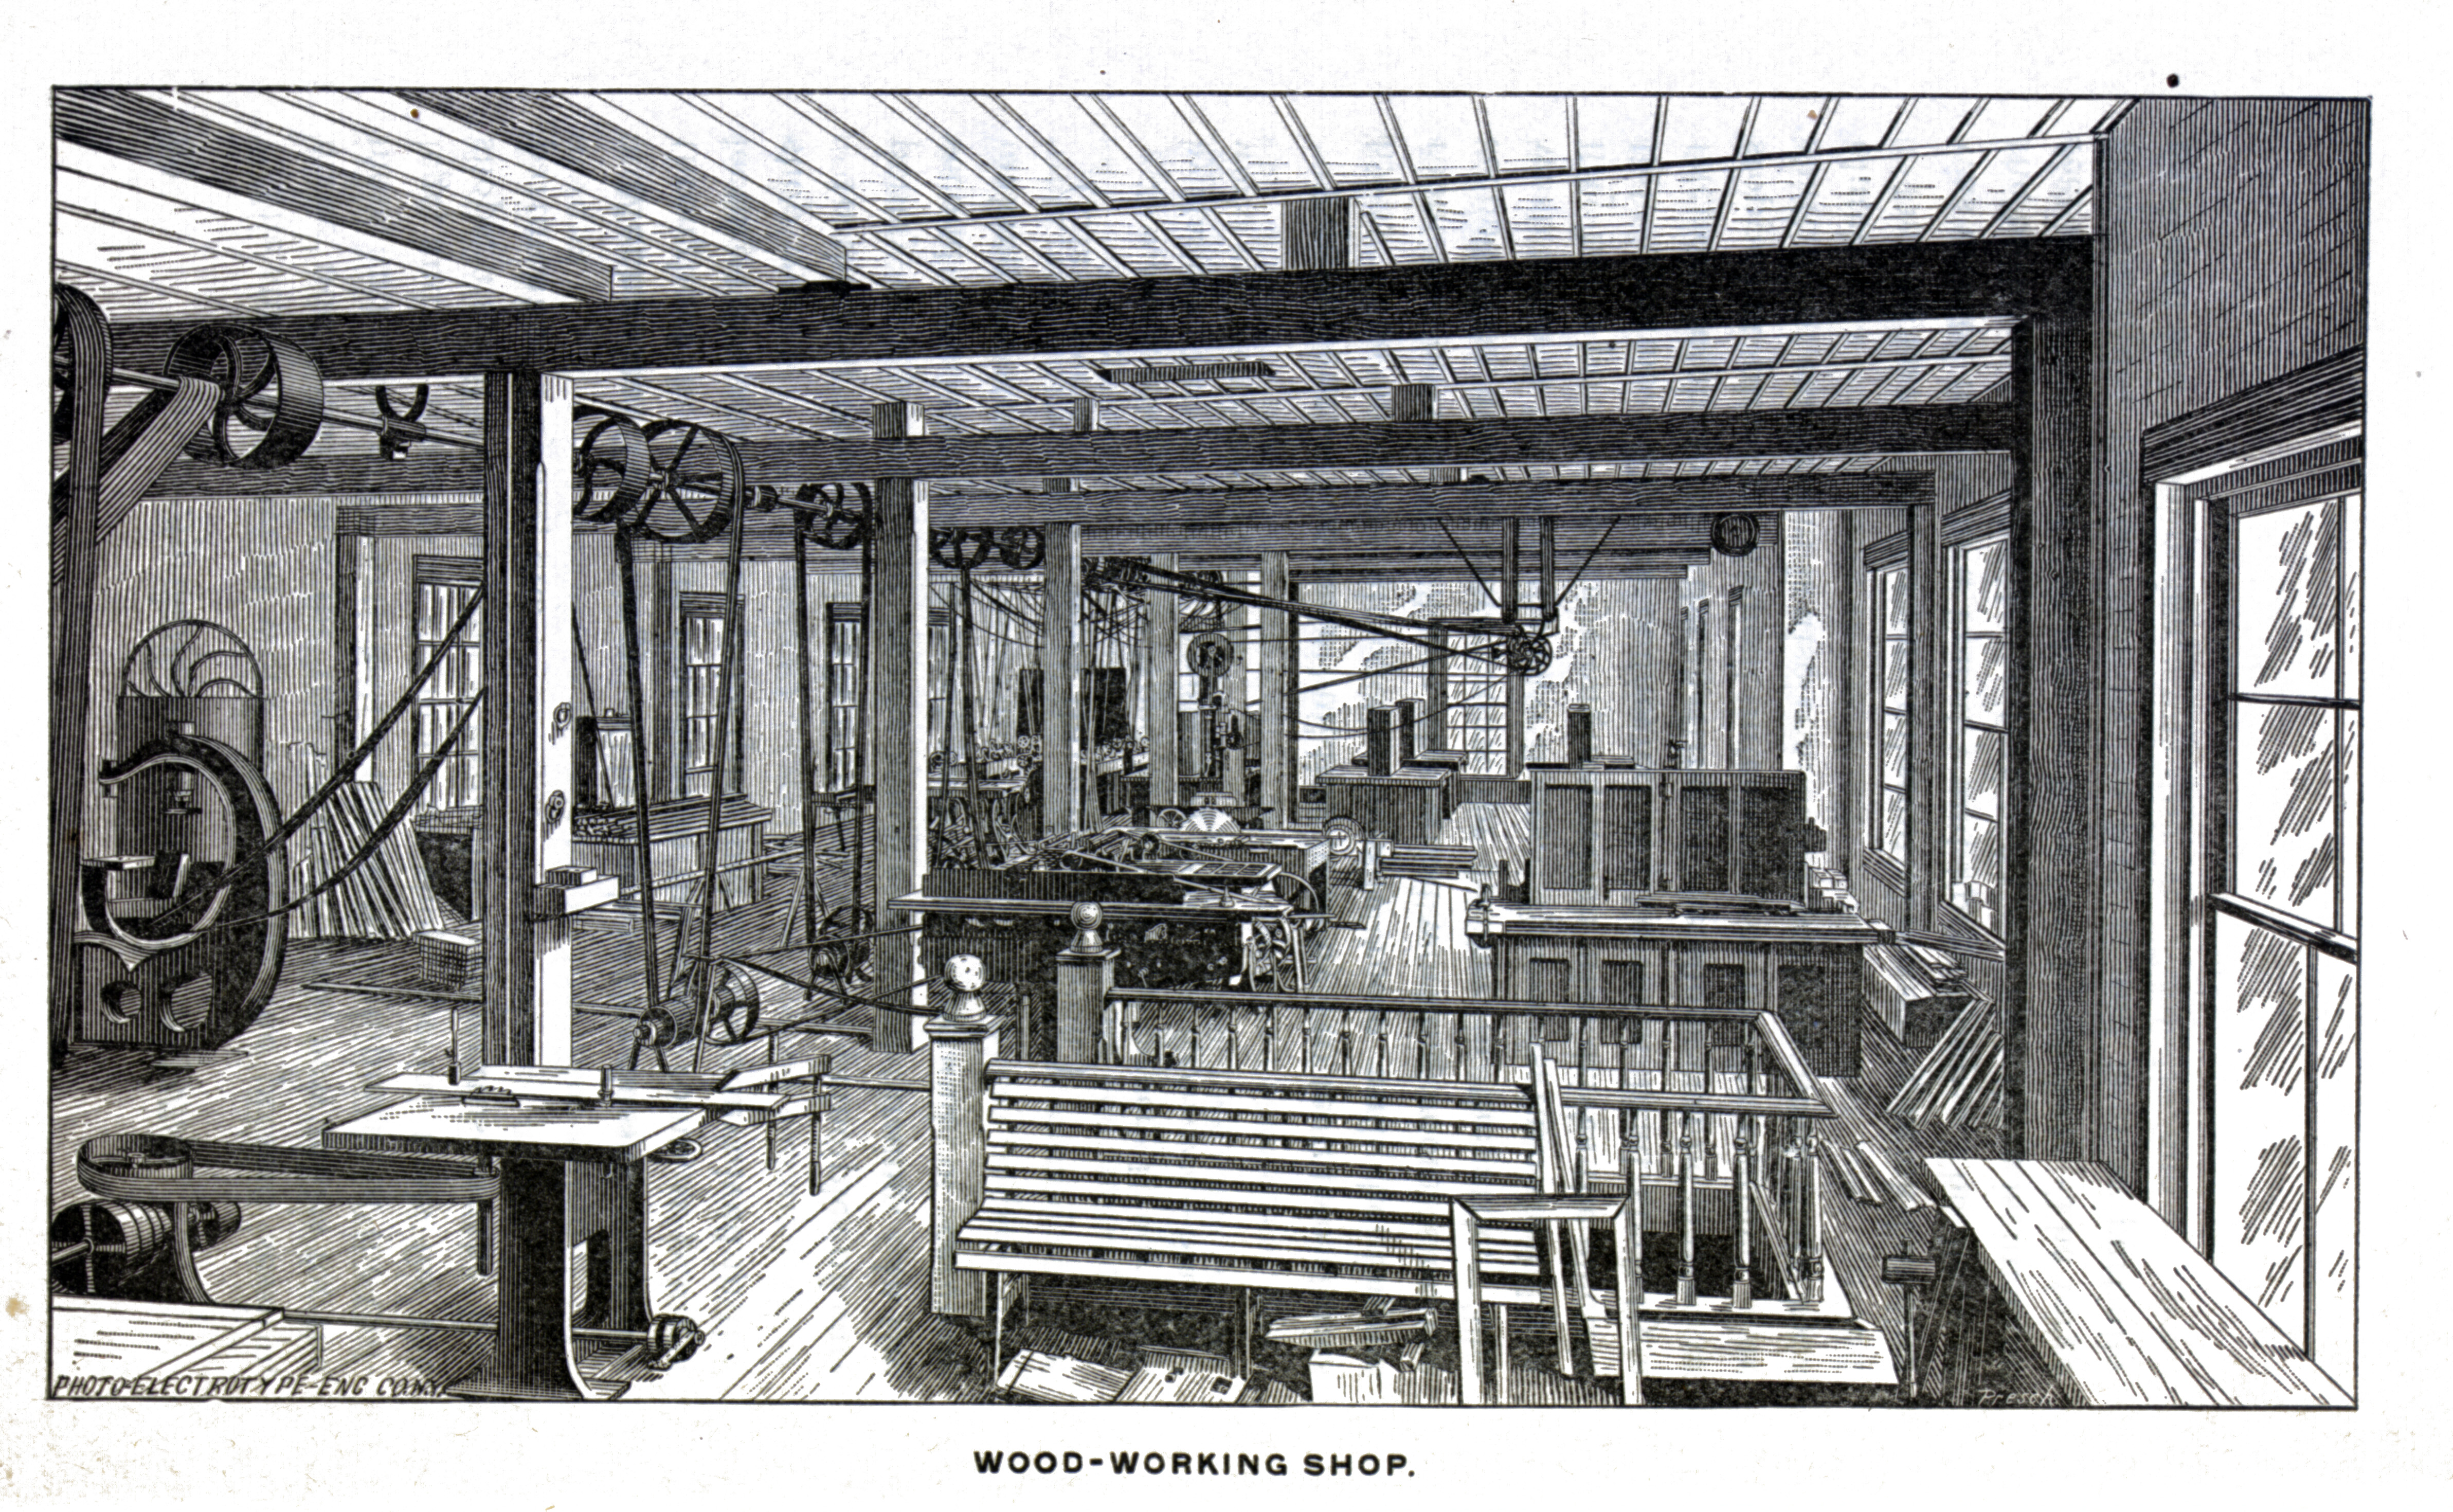 Preston And Olin Building, 1889 wood shop